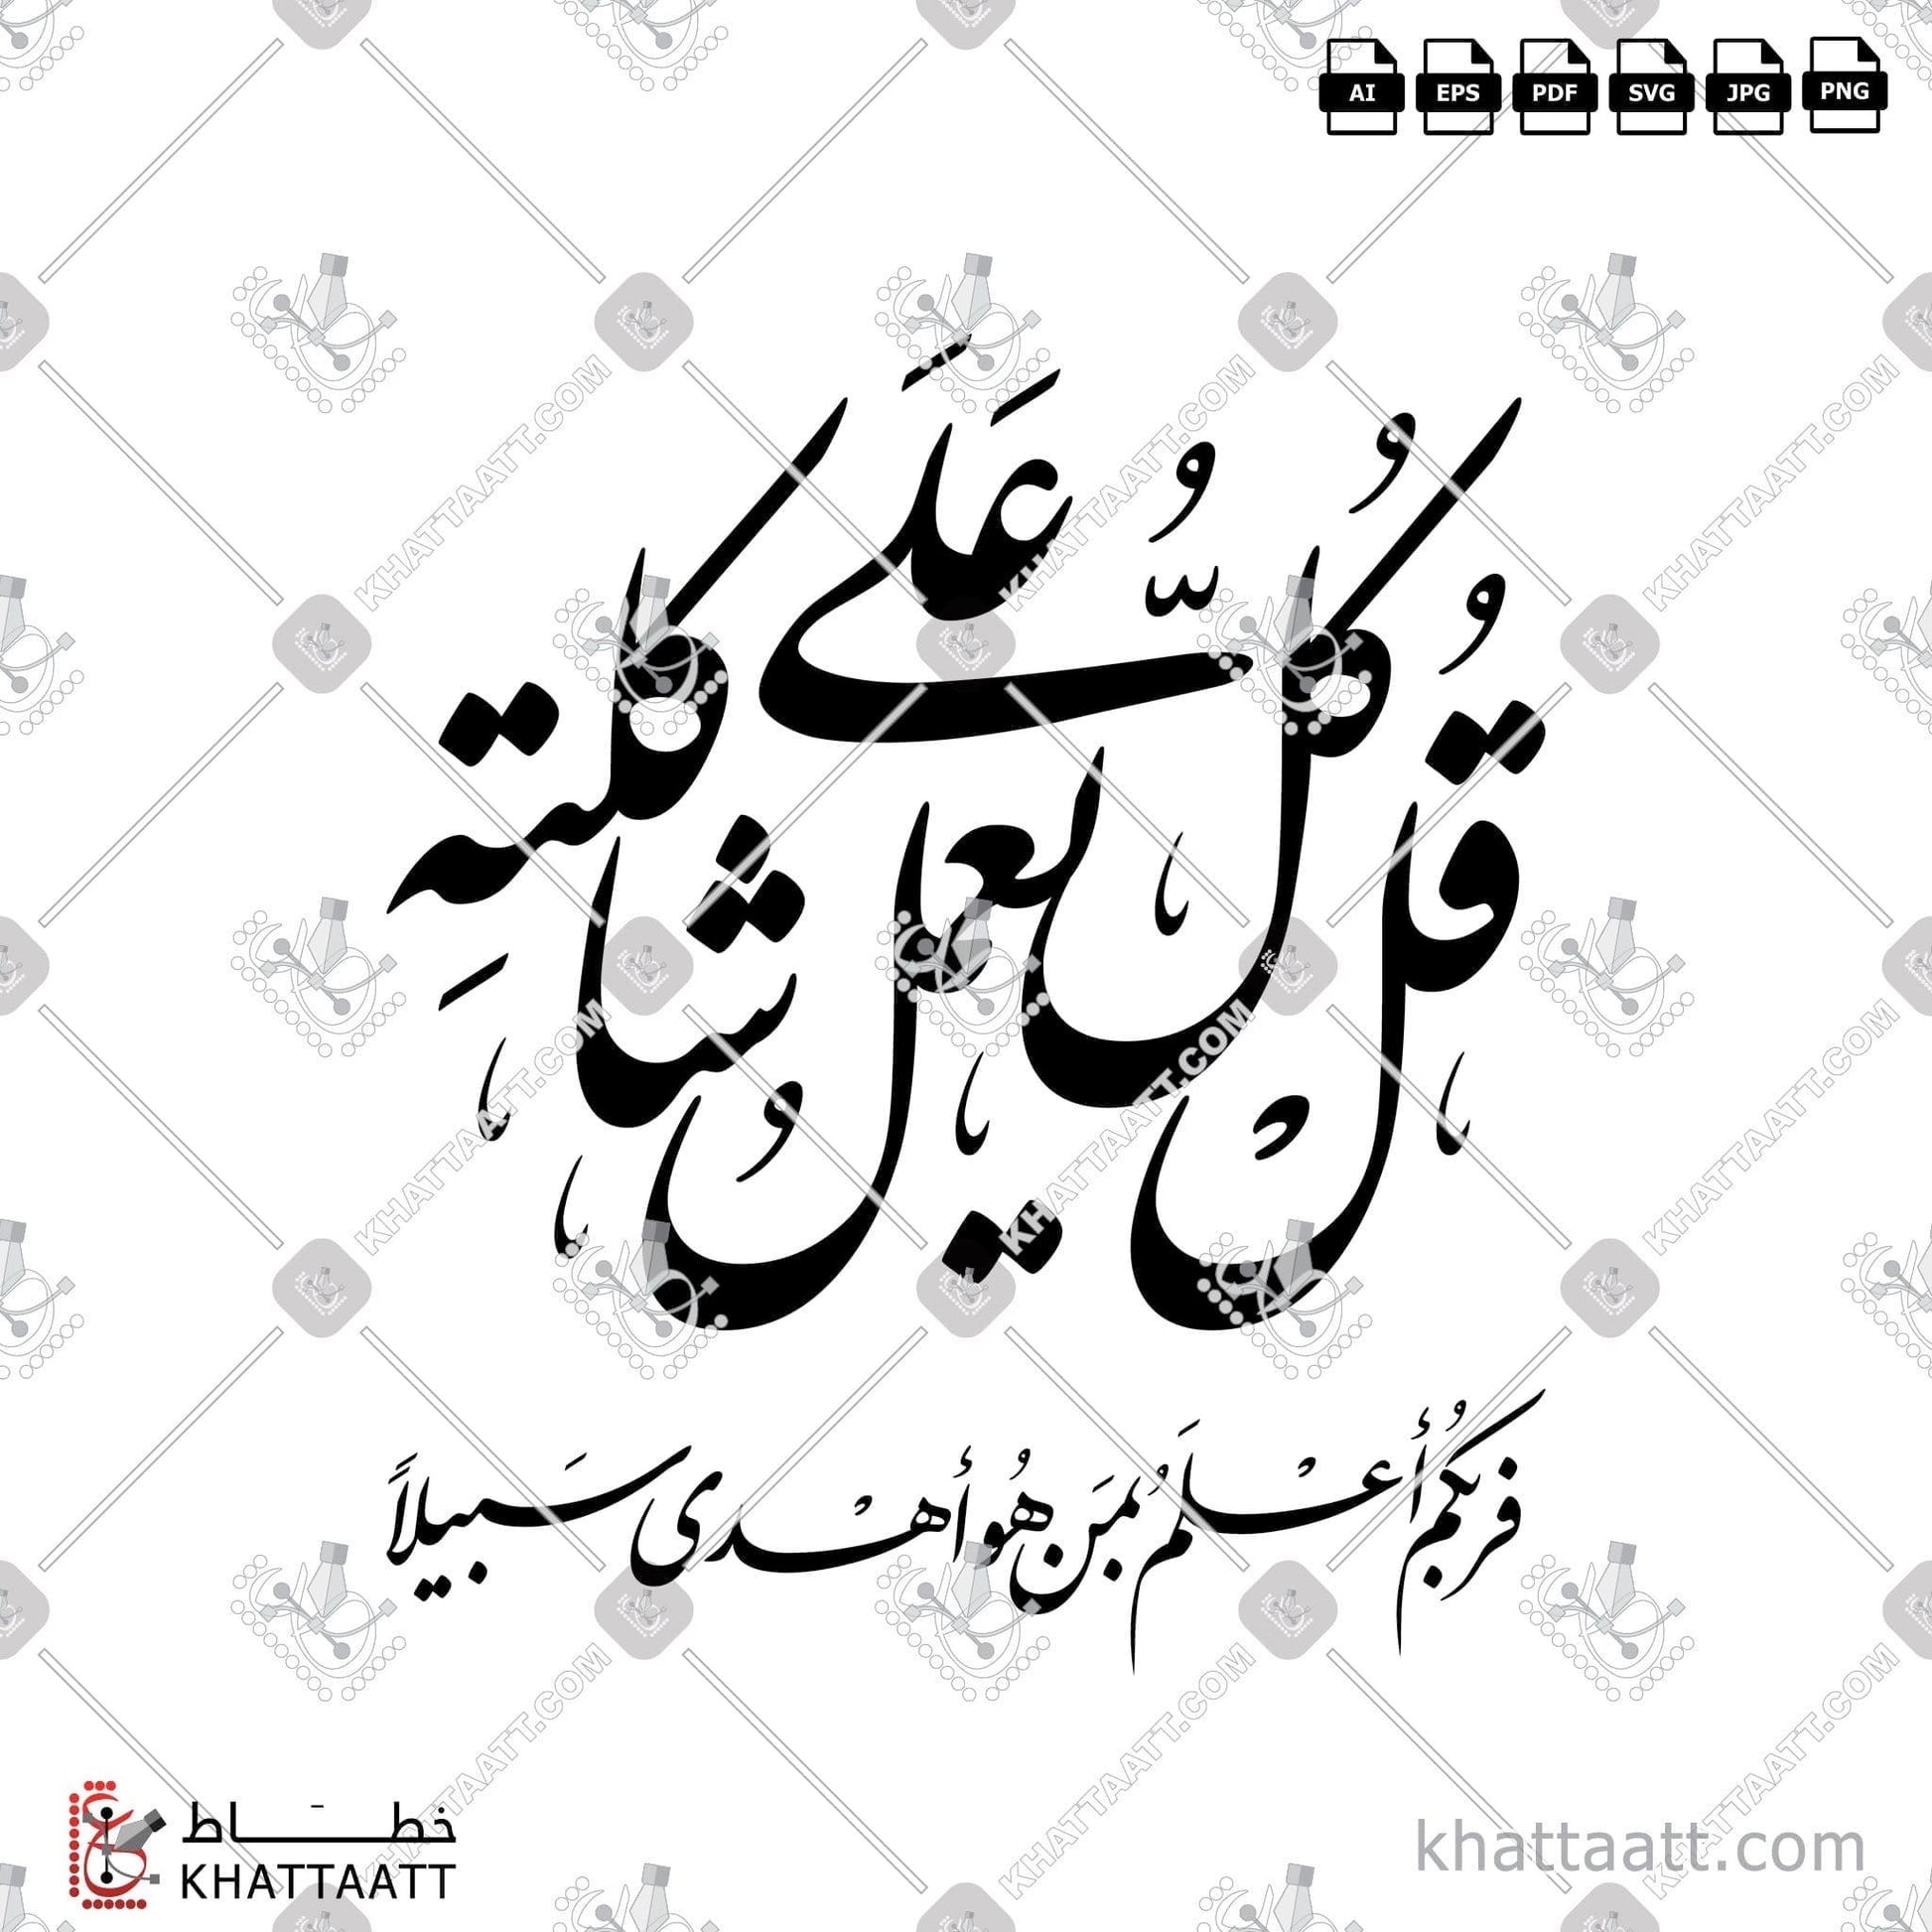 Download Arabic Calligraphy of قل كل يعمل على شاكلته in Farsi - الخط الفارسي in vector and .png